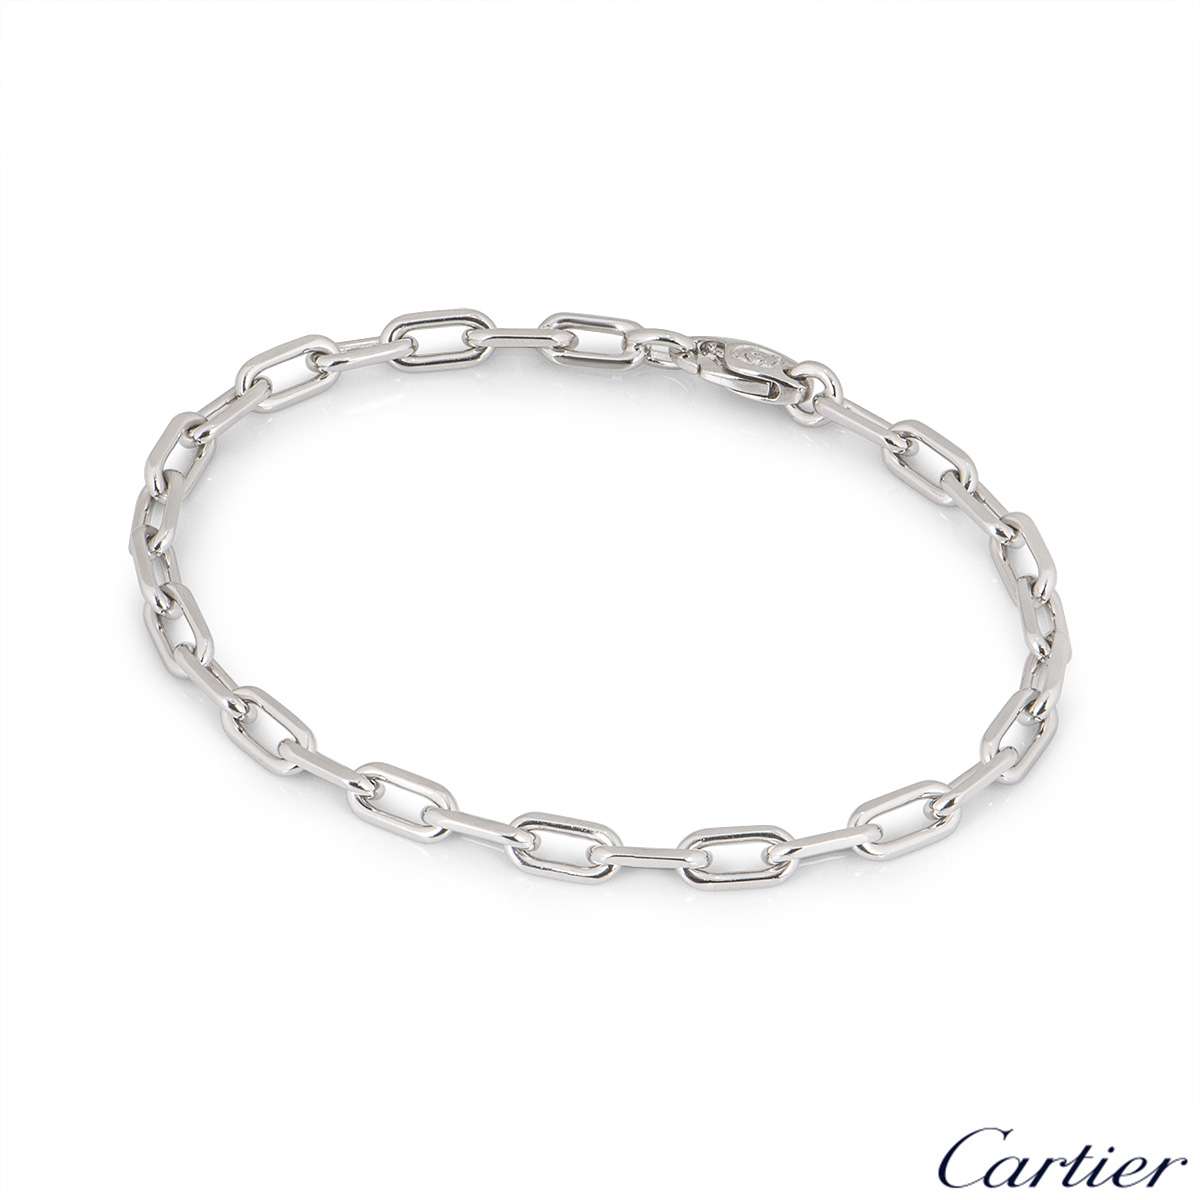 CRB6021400 - Santos de Cartier bracelet - White gold - Cartier